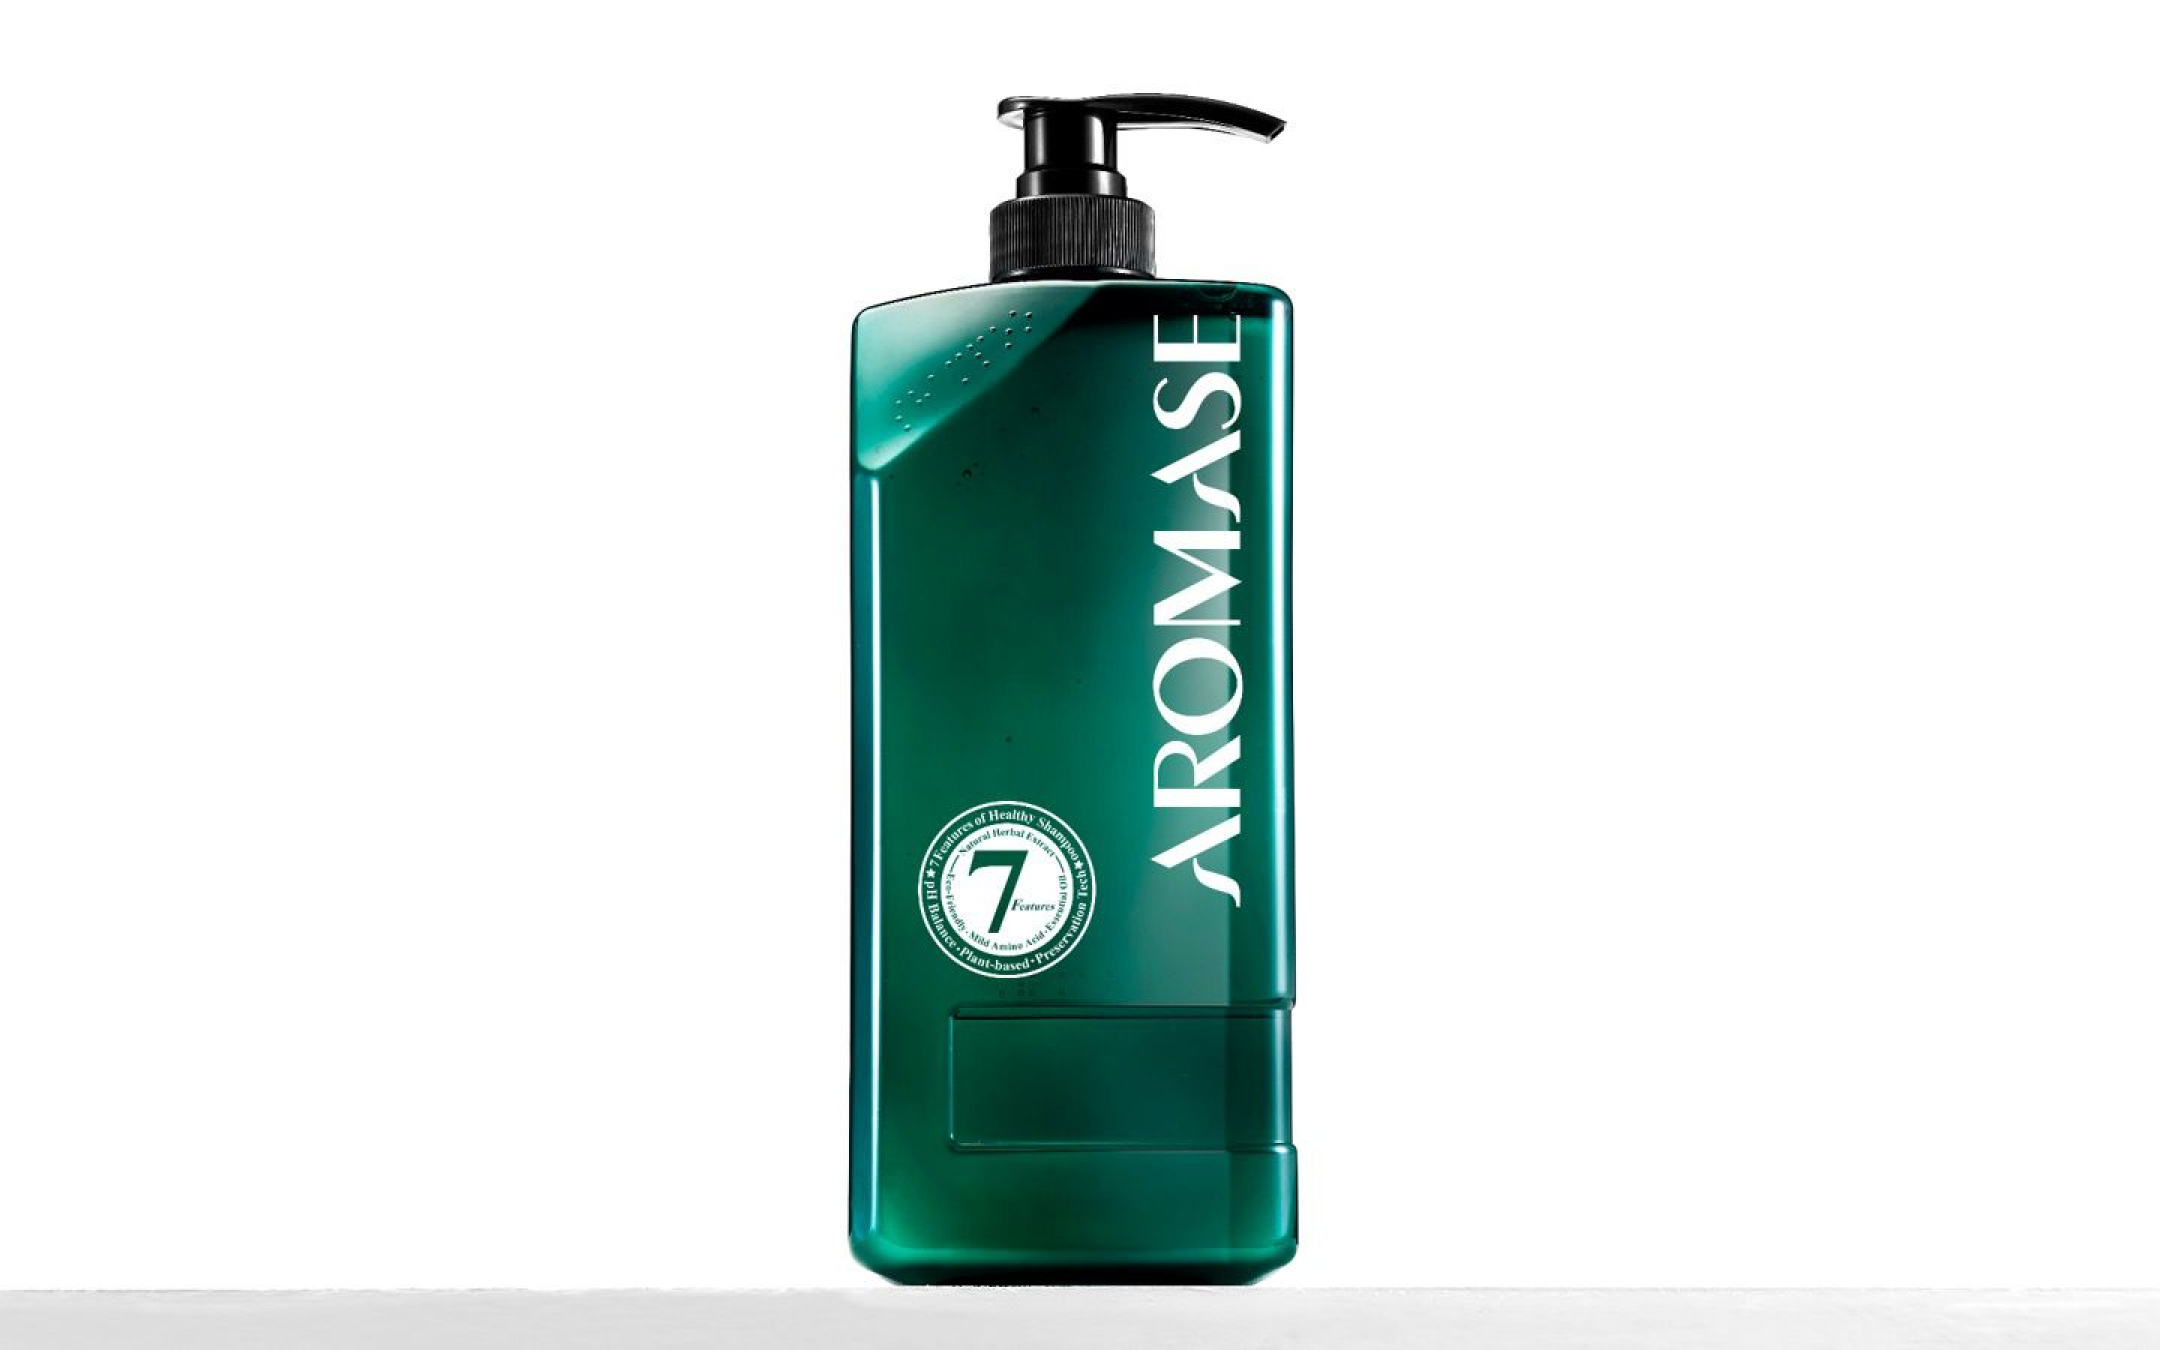 AROMASE- Anti hairloss Shampoo